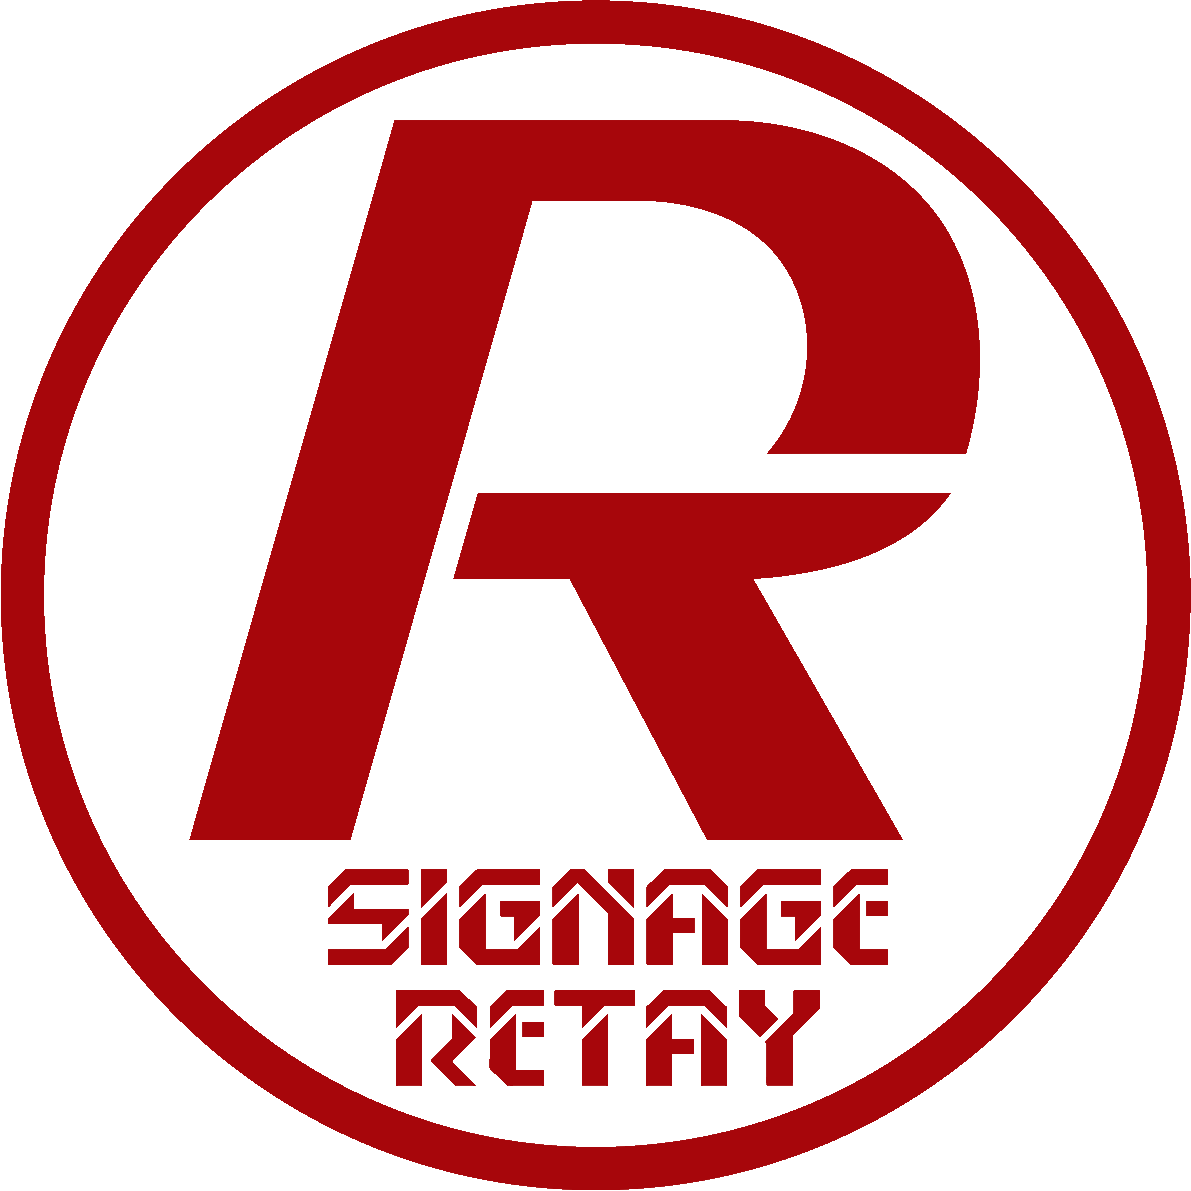 Signage Maker Retay